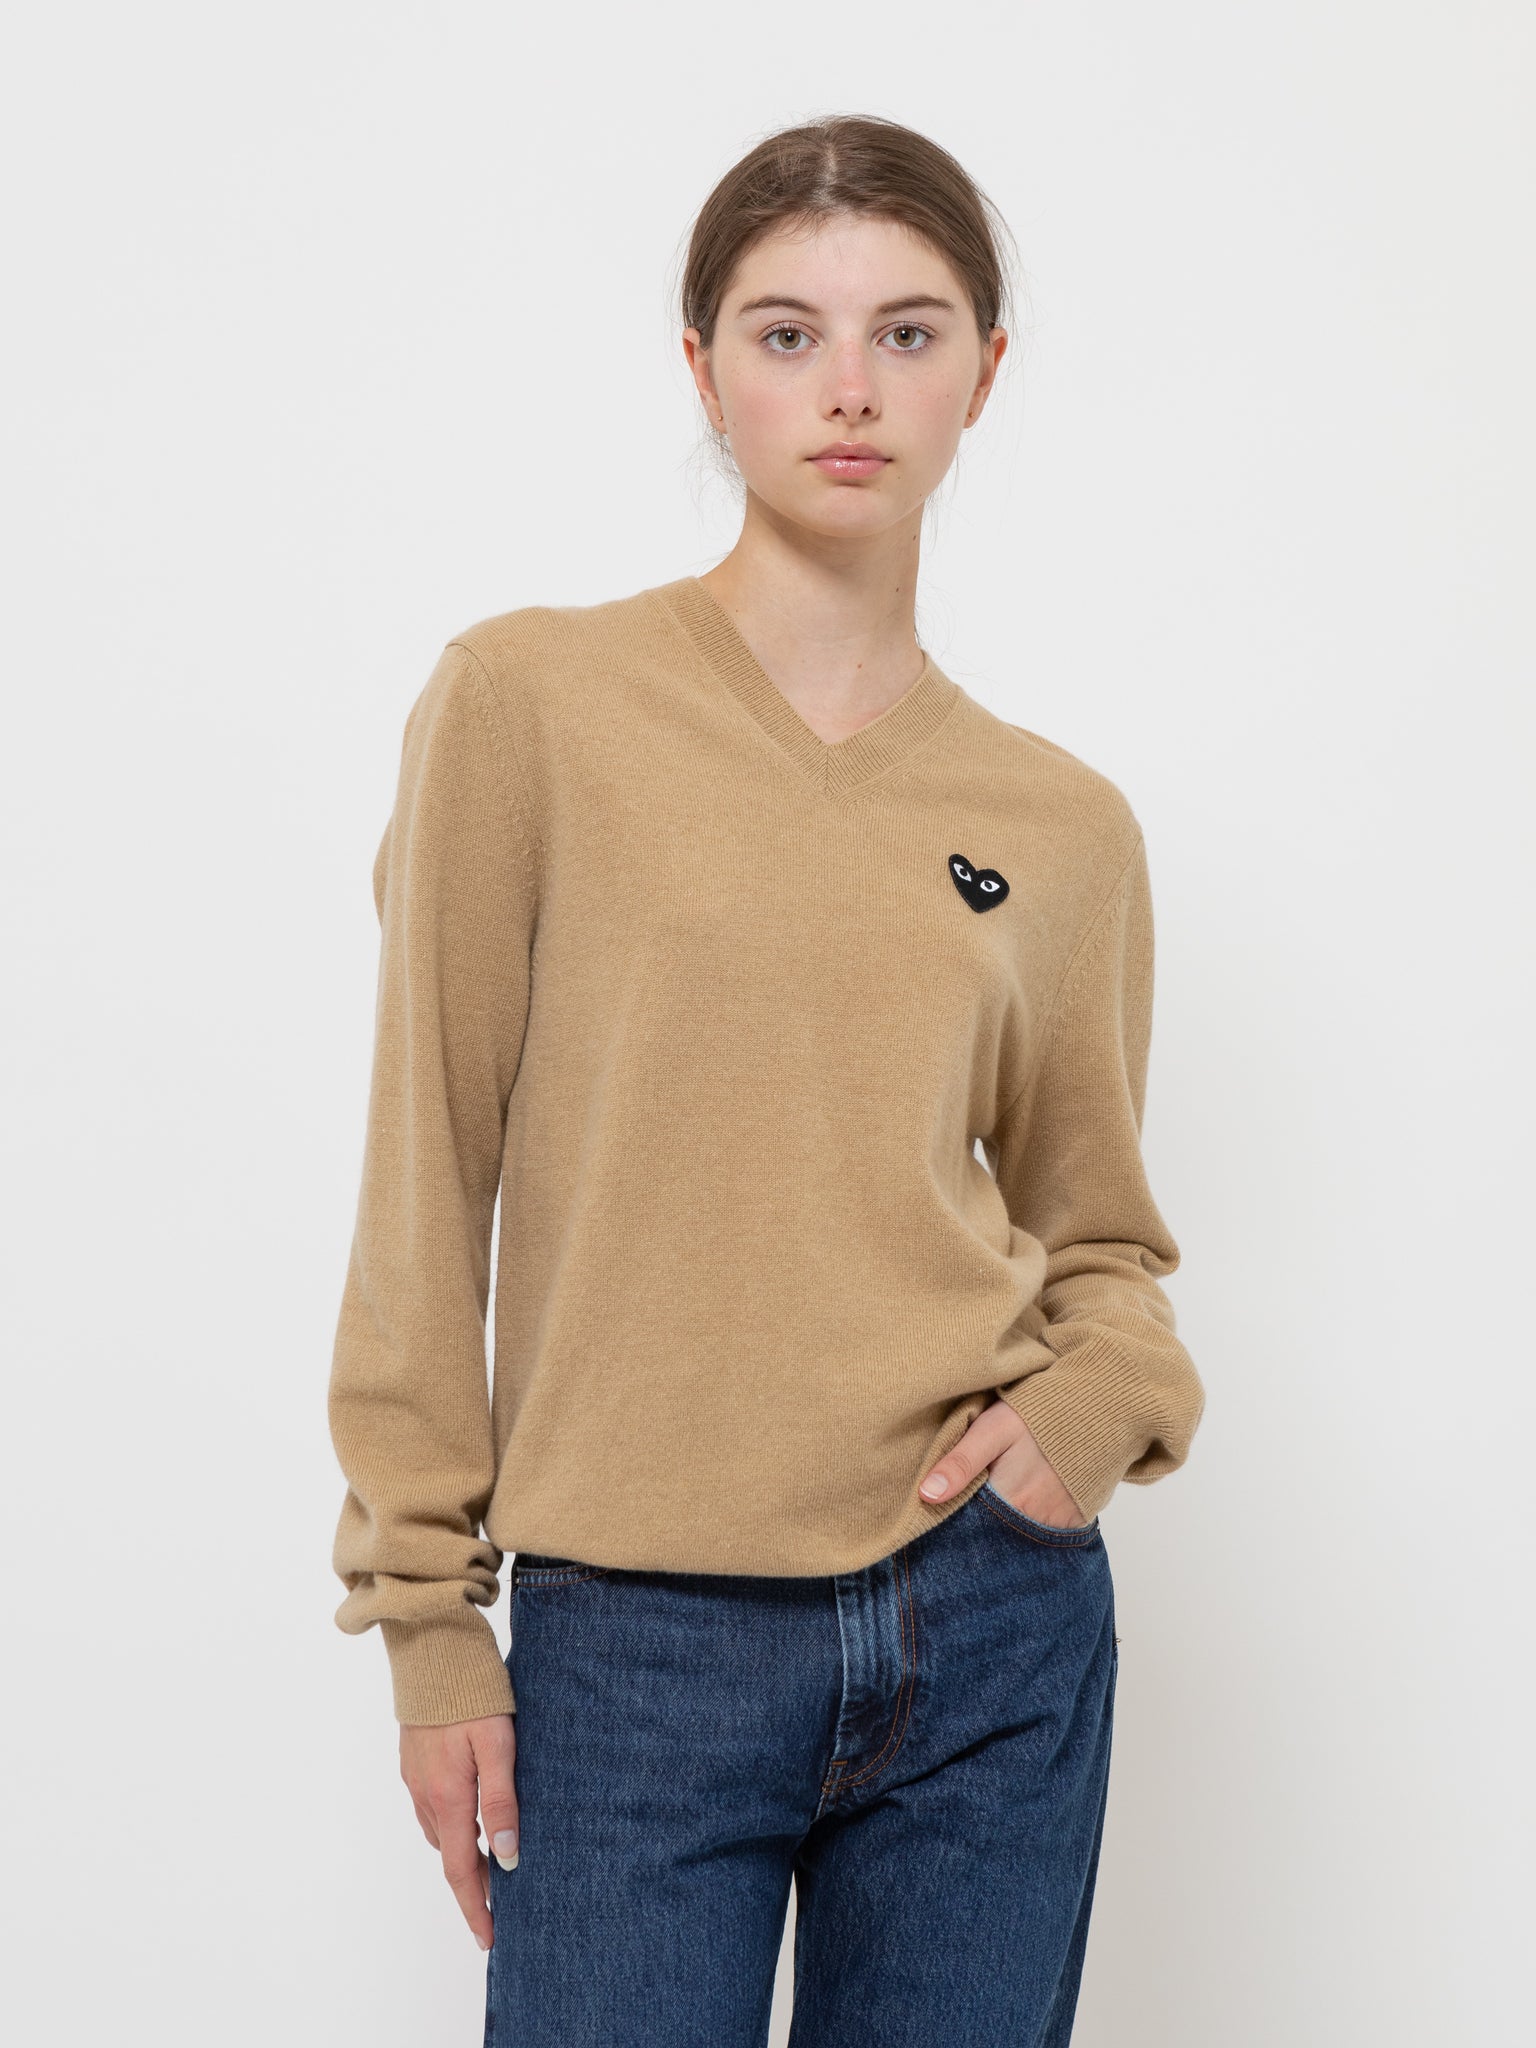 Men's Fit Sweater V-neck Light Camel Black Heart